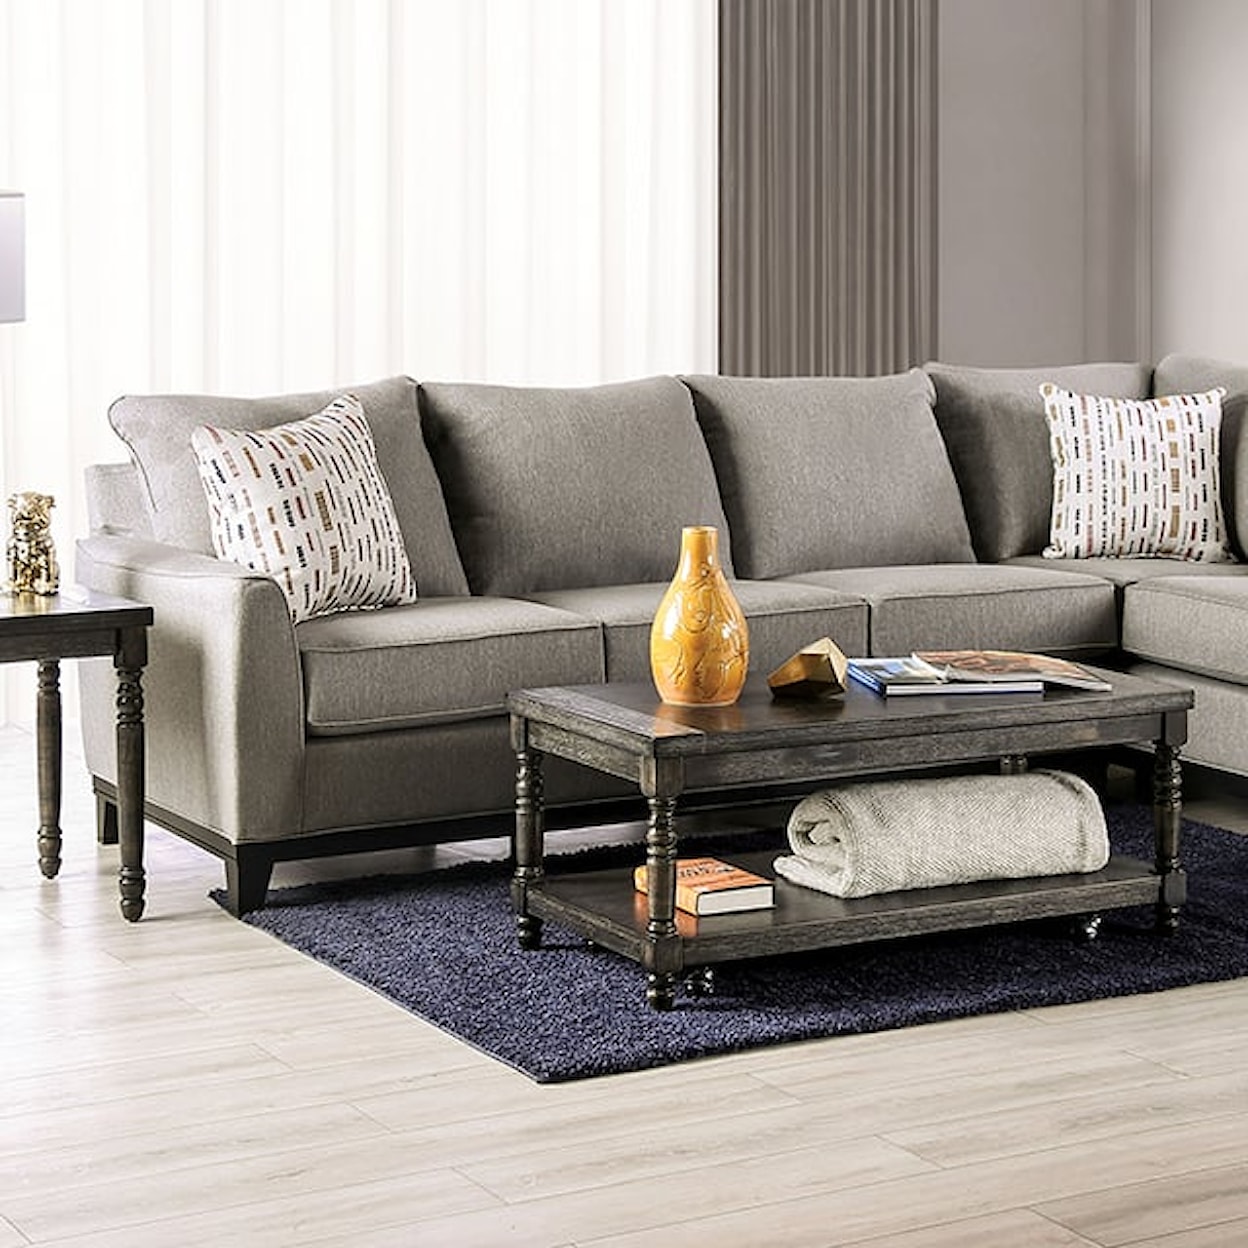 Furniture of America Lantwit Sectional Sofa